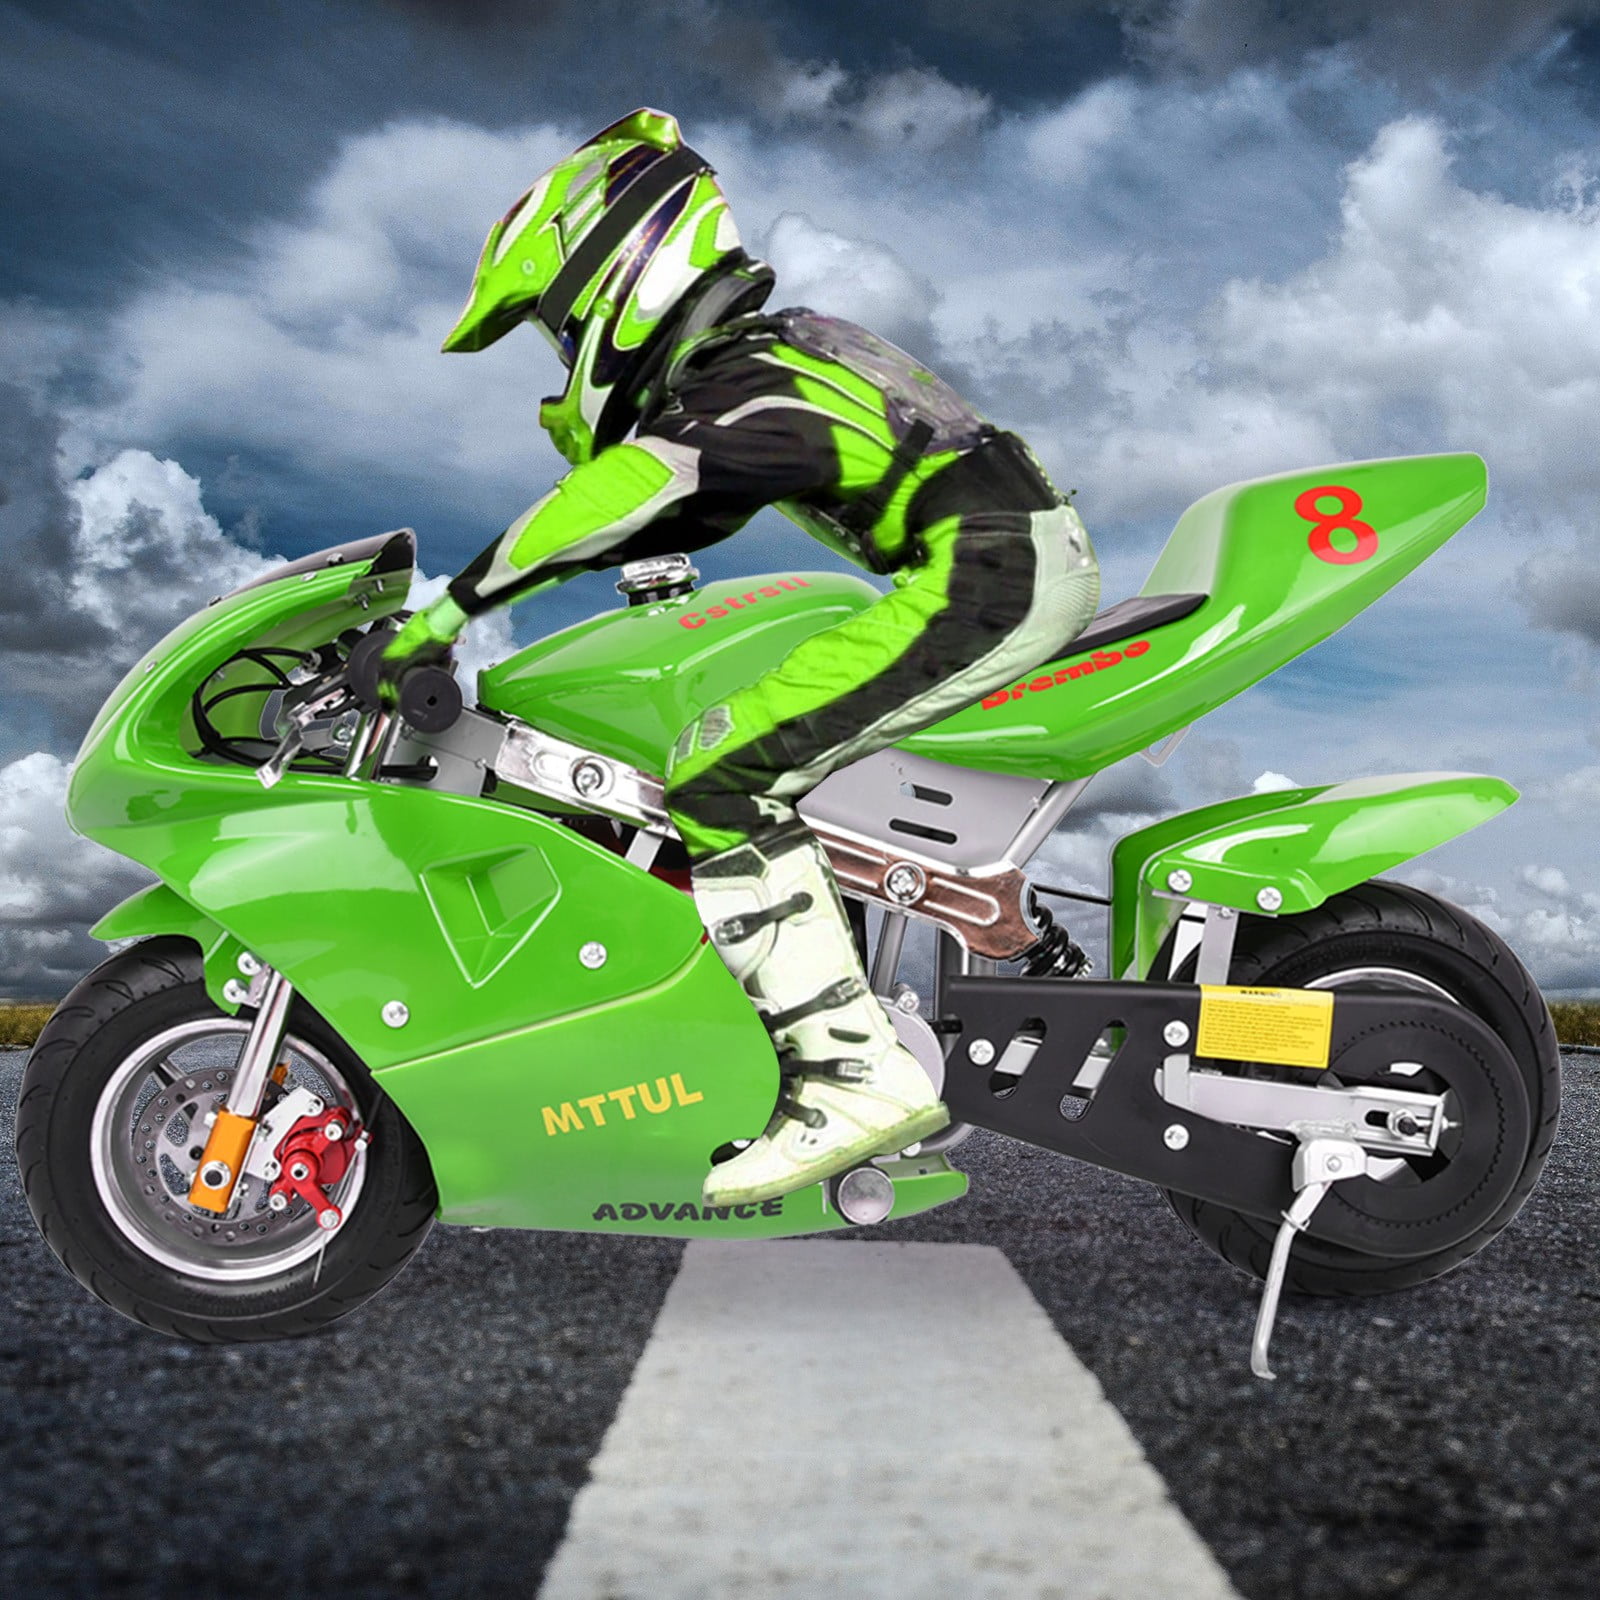 Mini Gas Power Bike Motorcycle 49cc 4-Stroke Engine For Kids Teens US - Walmart.com